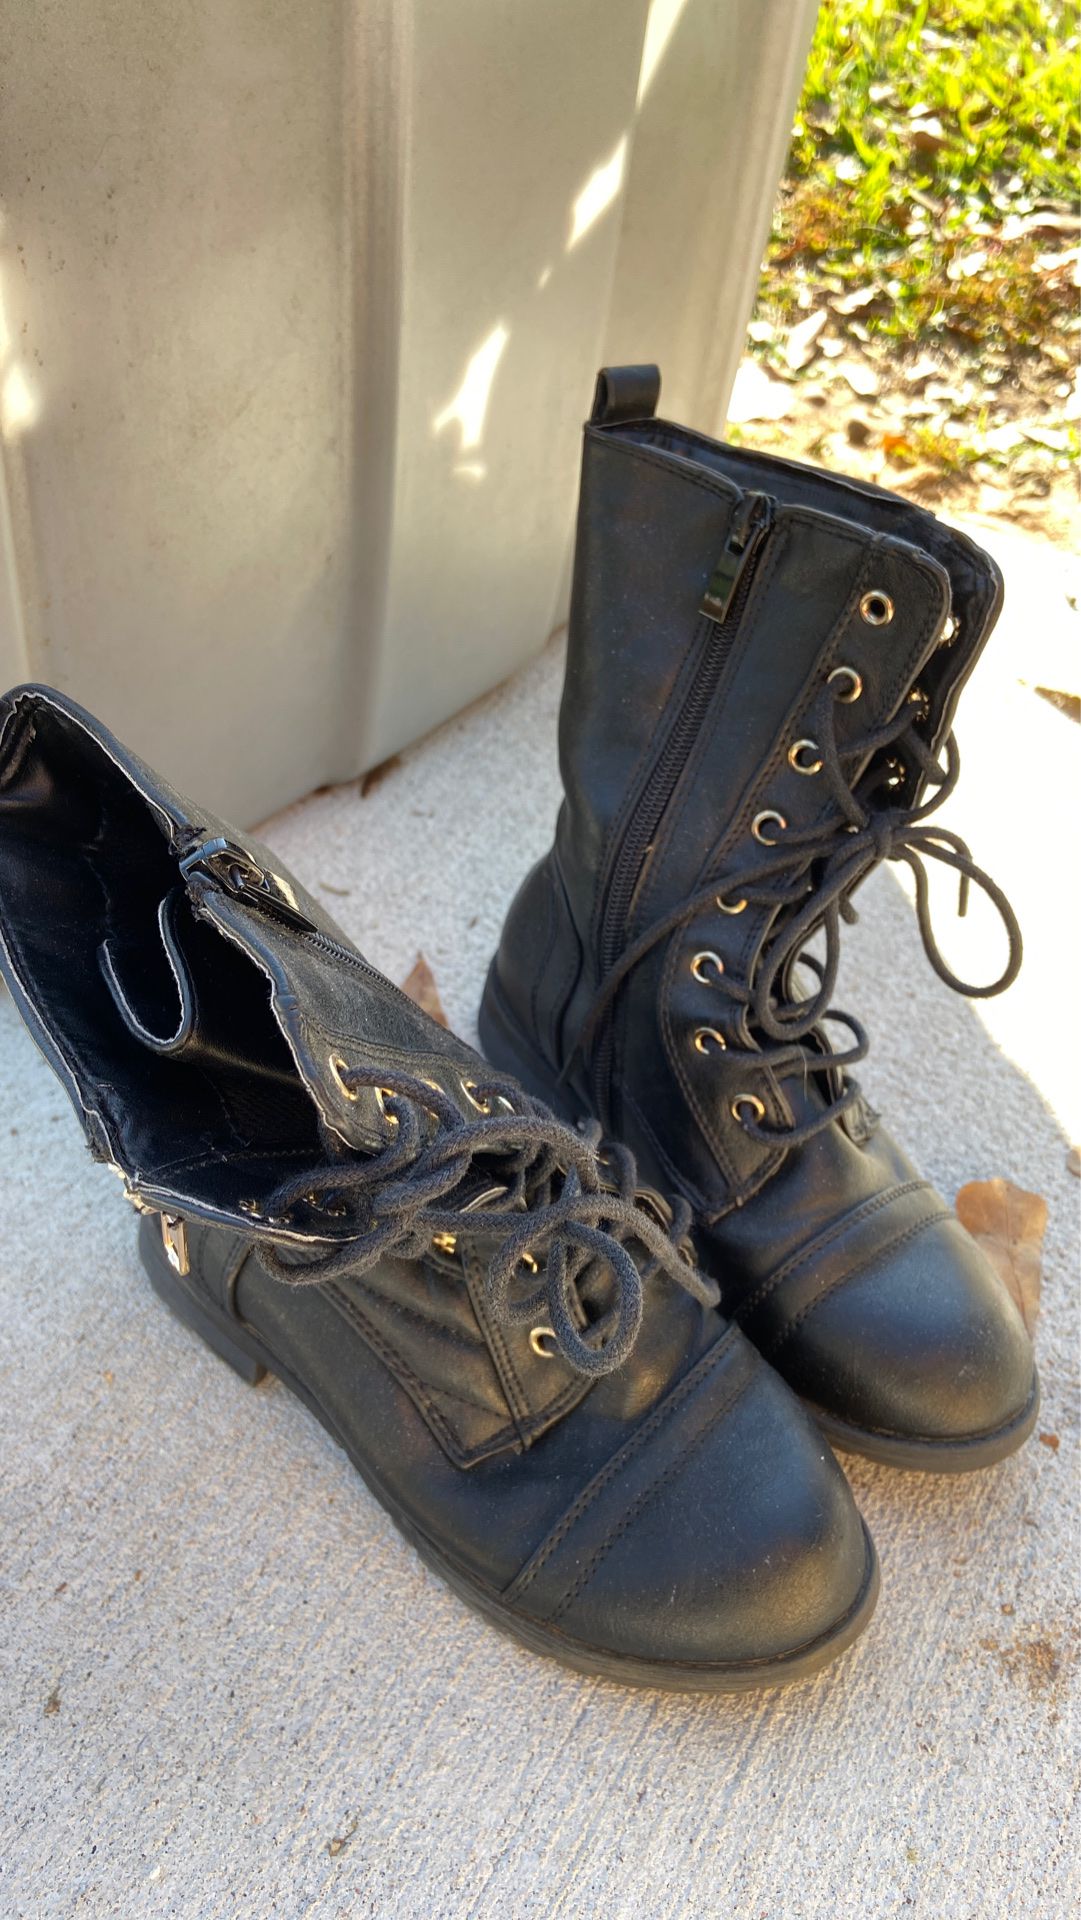 Girls black boots